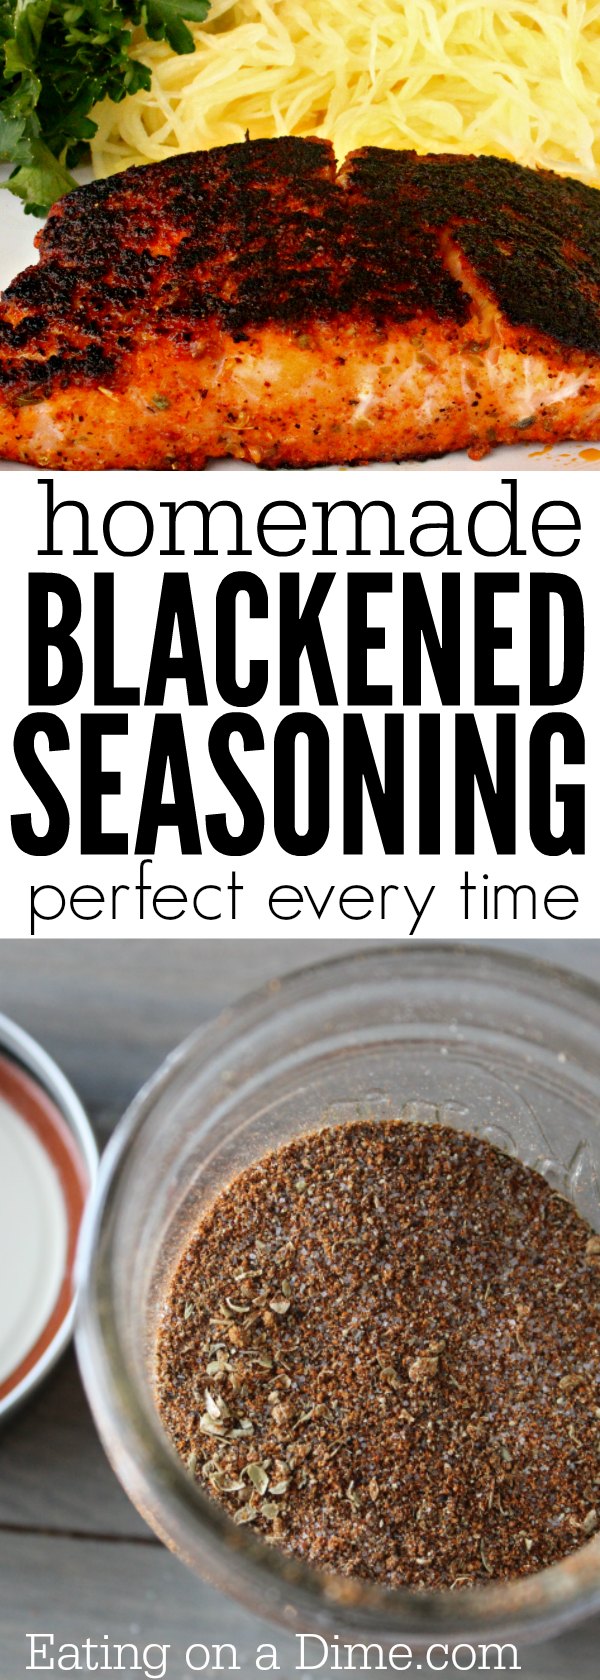 Homemade Blackened Seasoning Recipe - Eating on a Dime